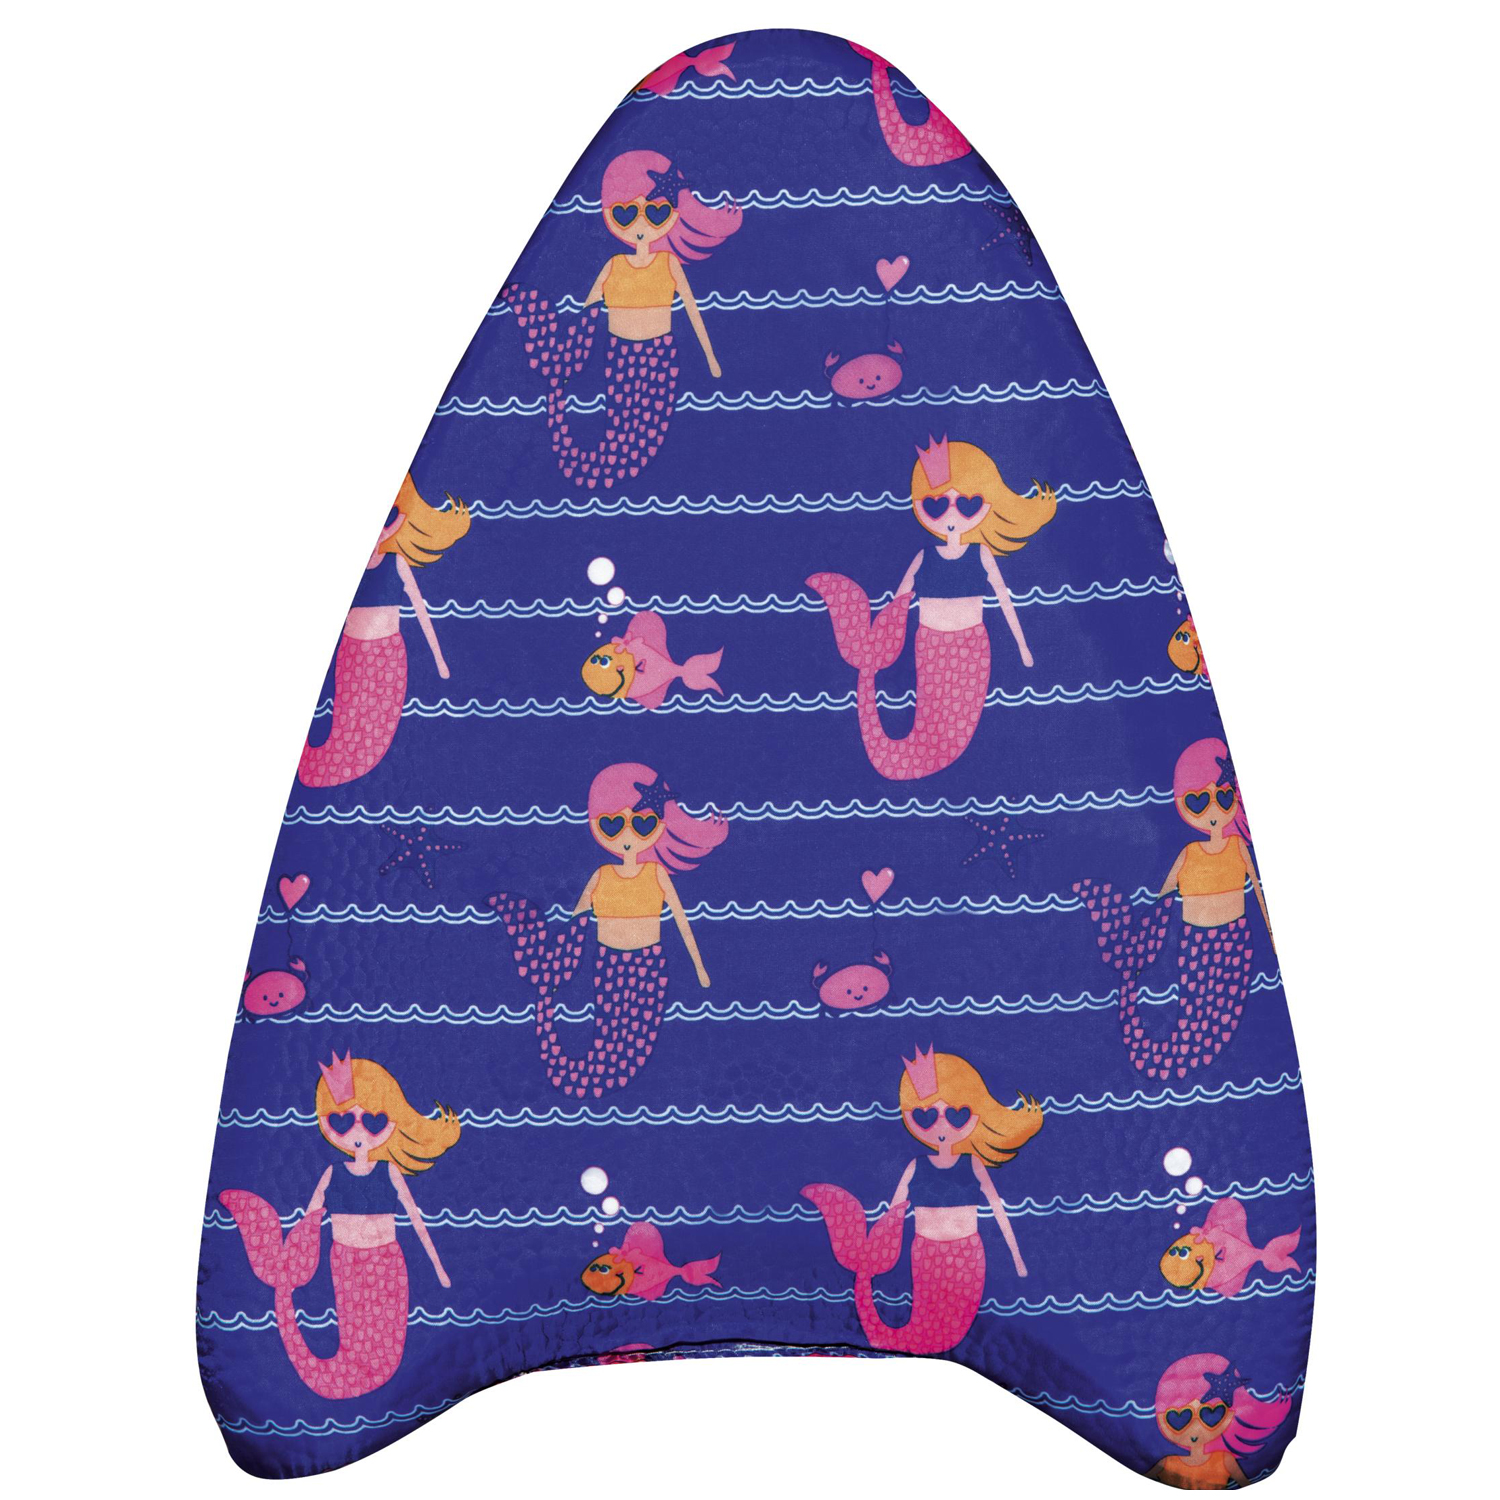 Fabric swim board - Mermaid